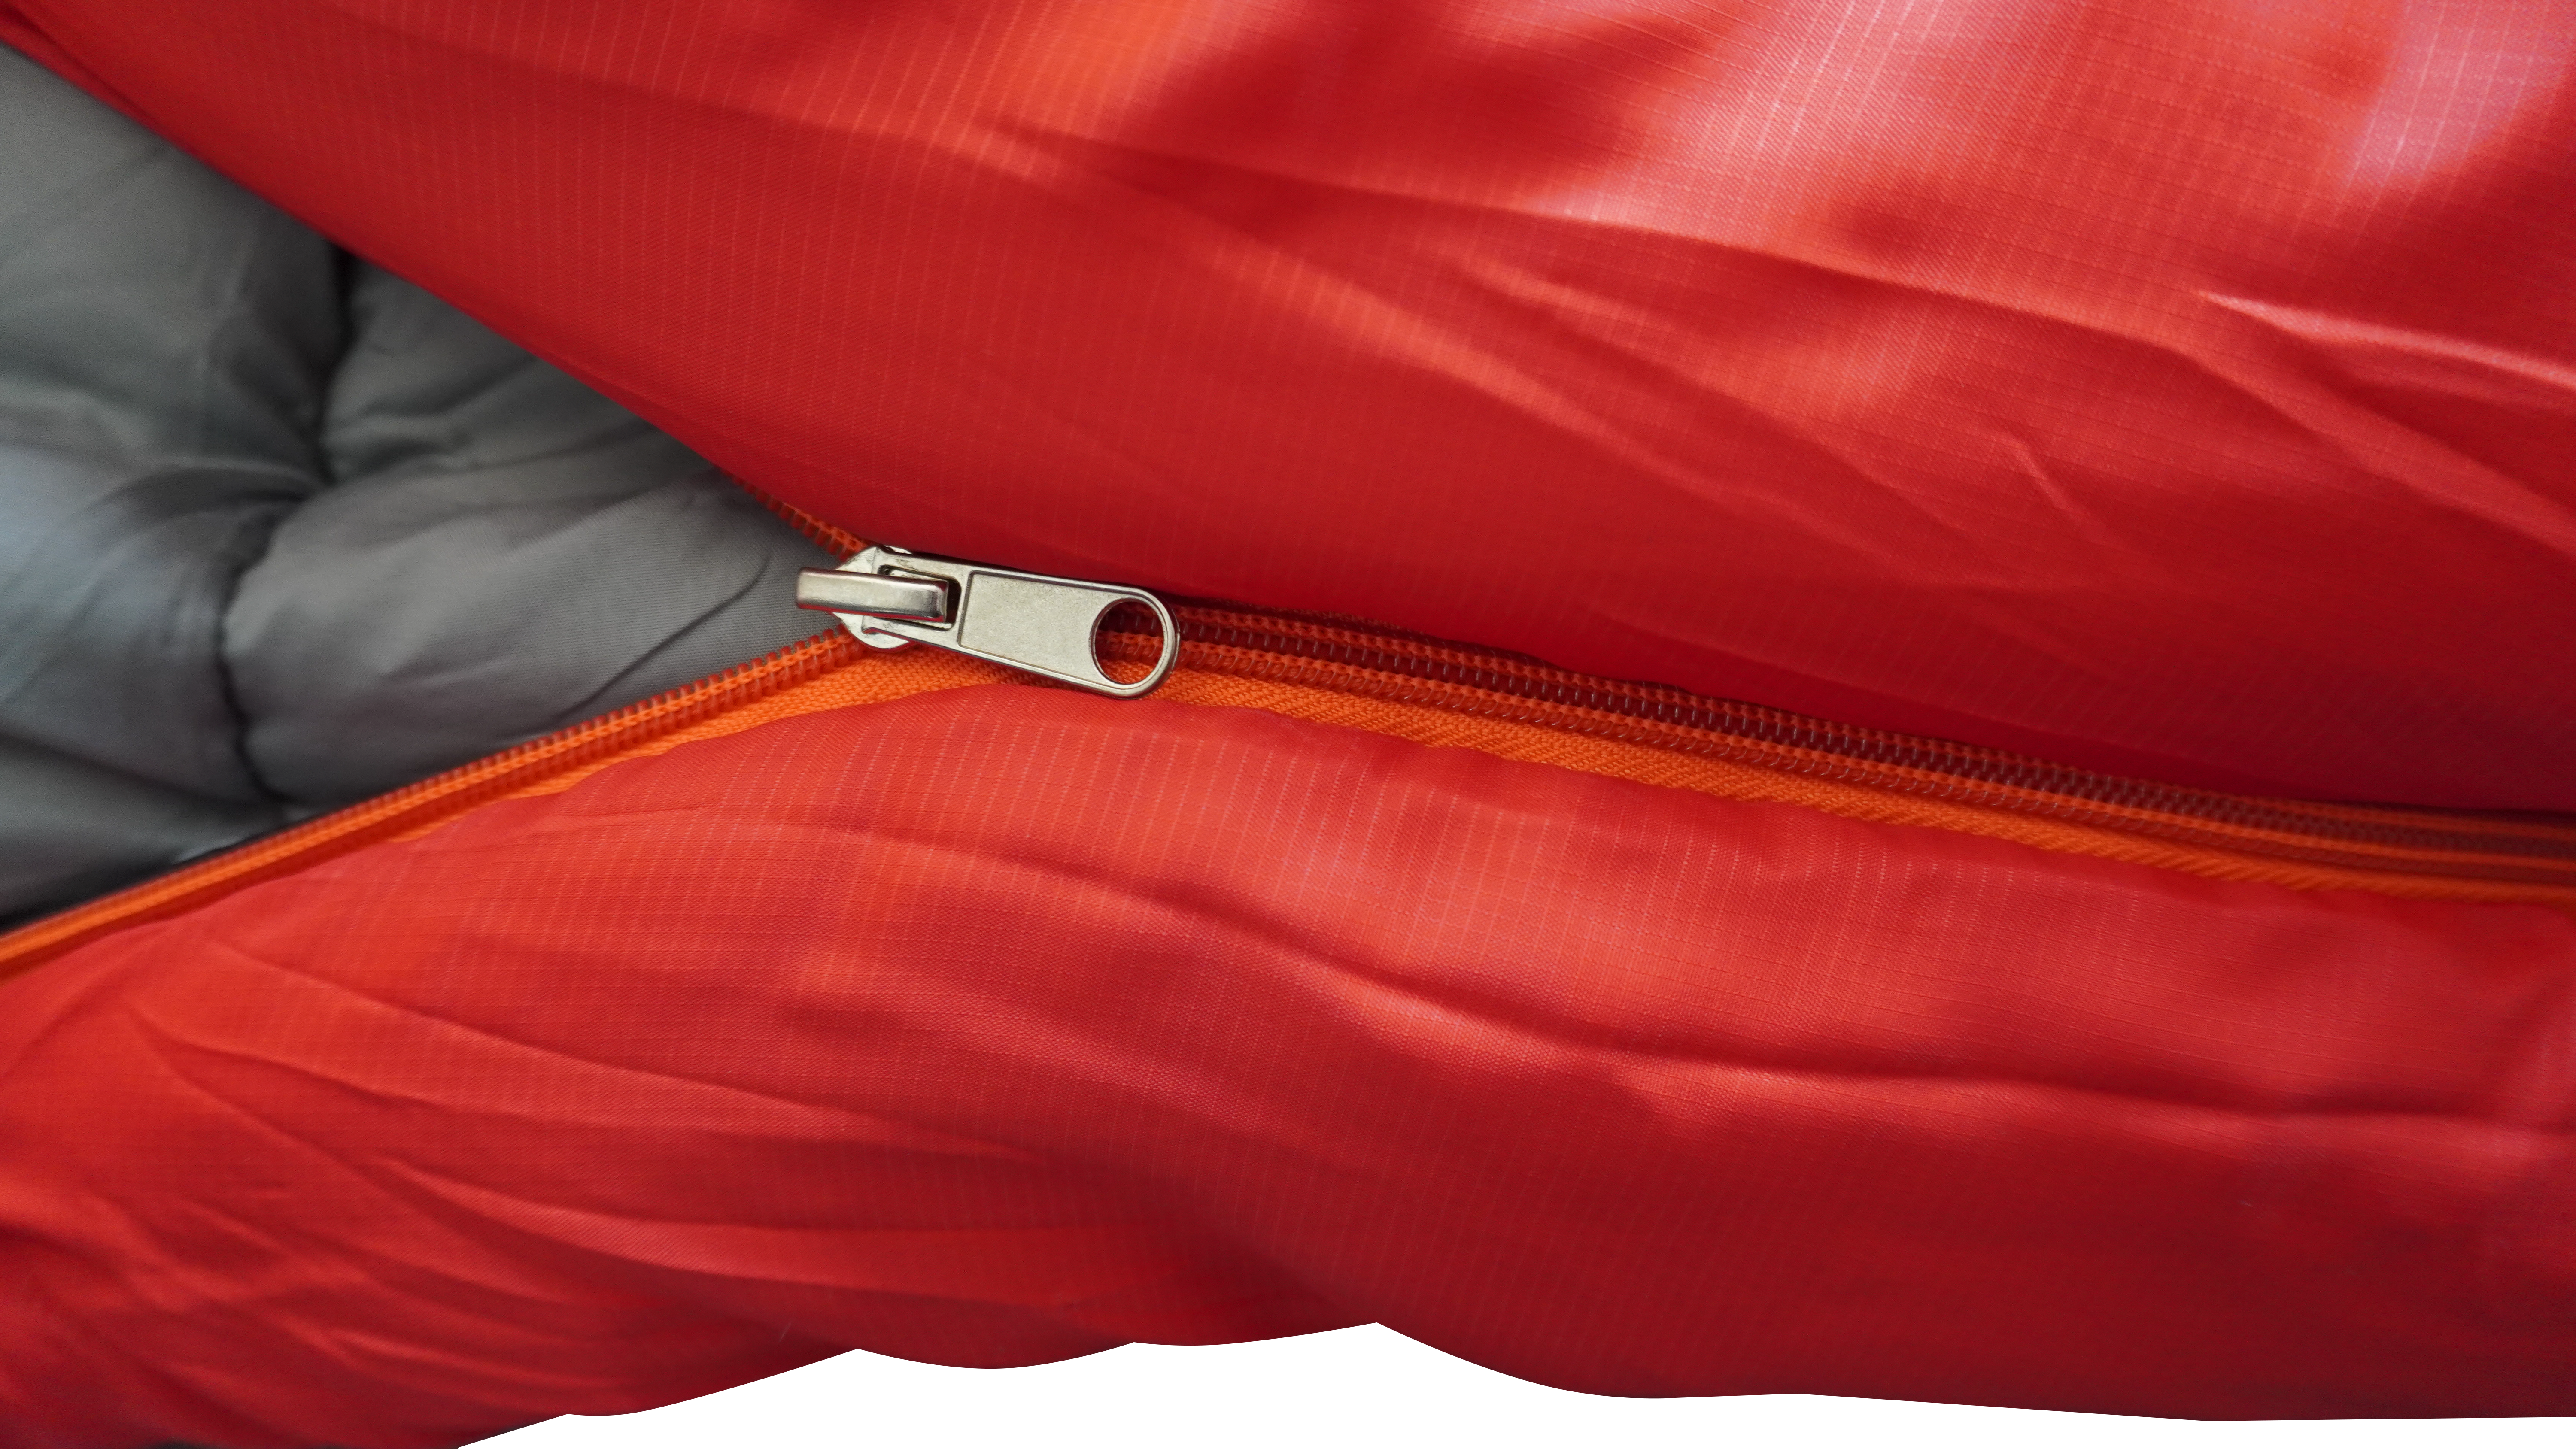 Orange close-fitting mummy sleeping bag